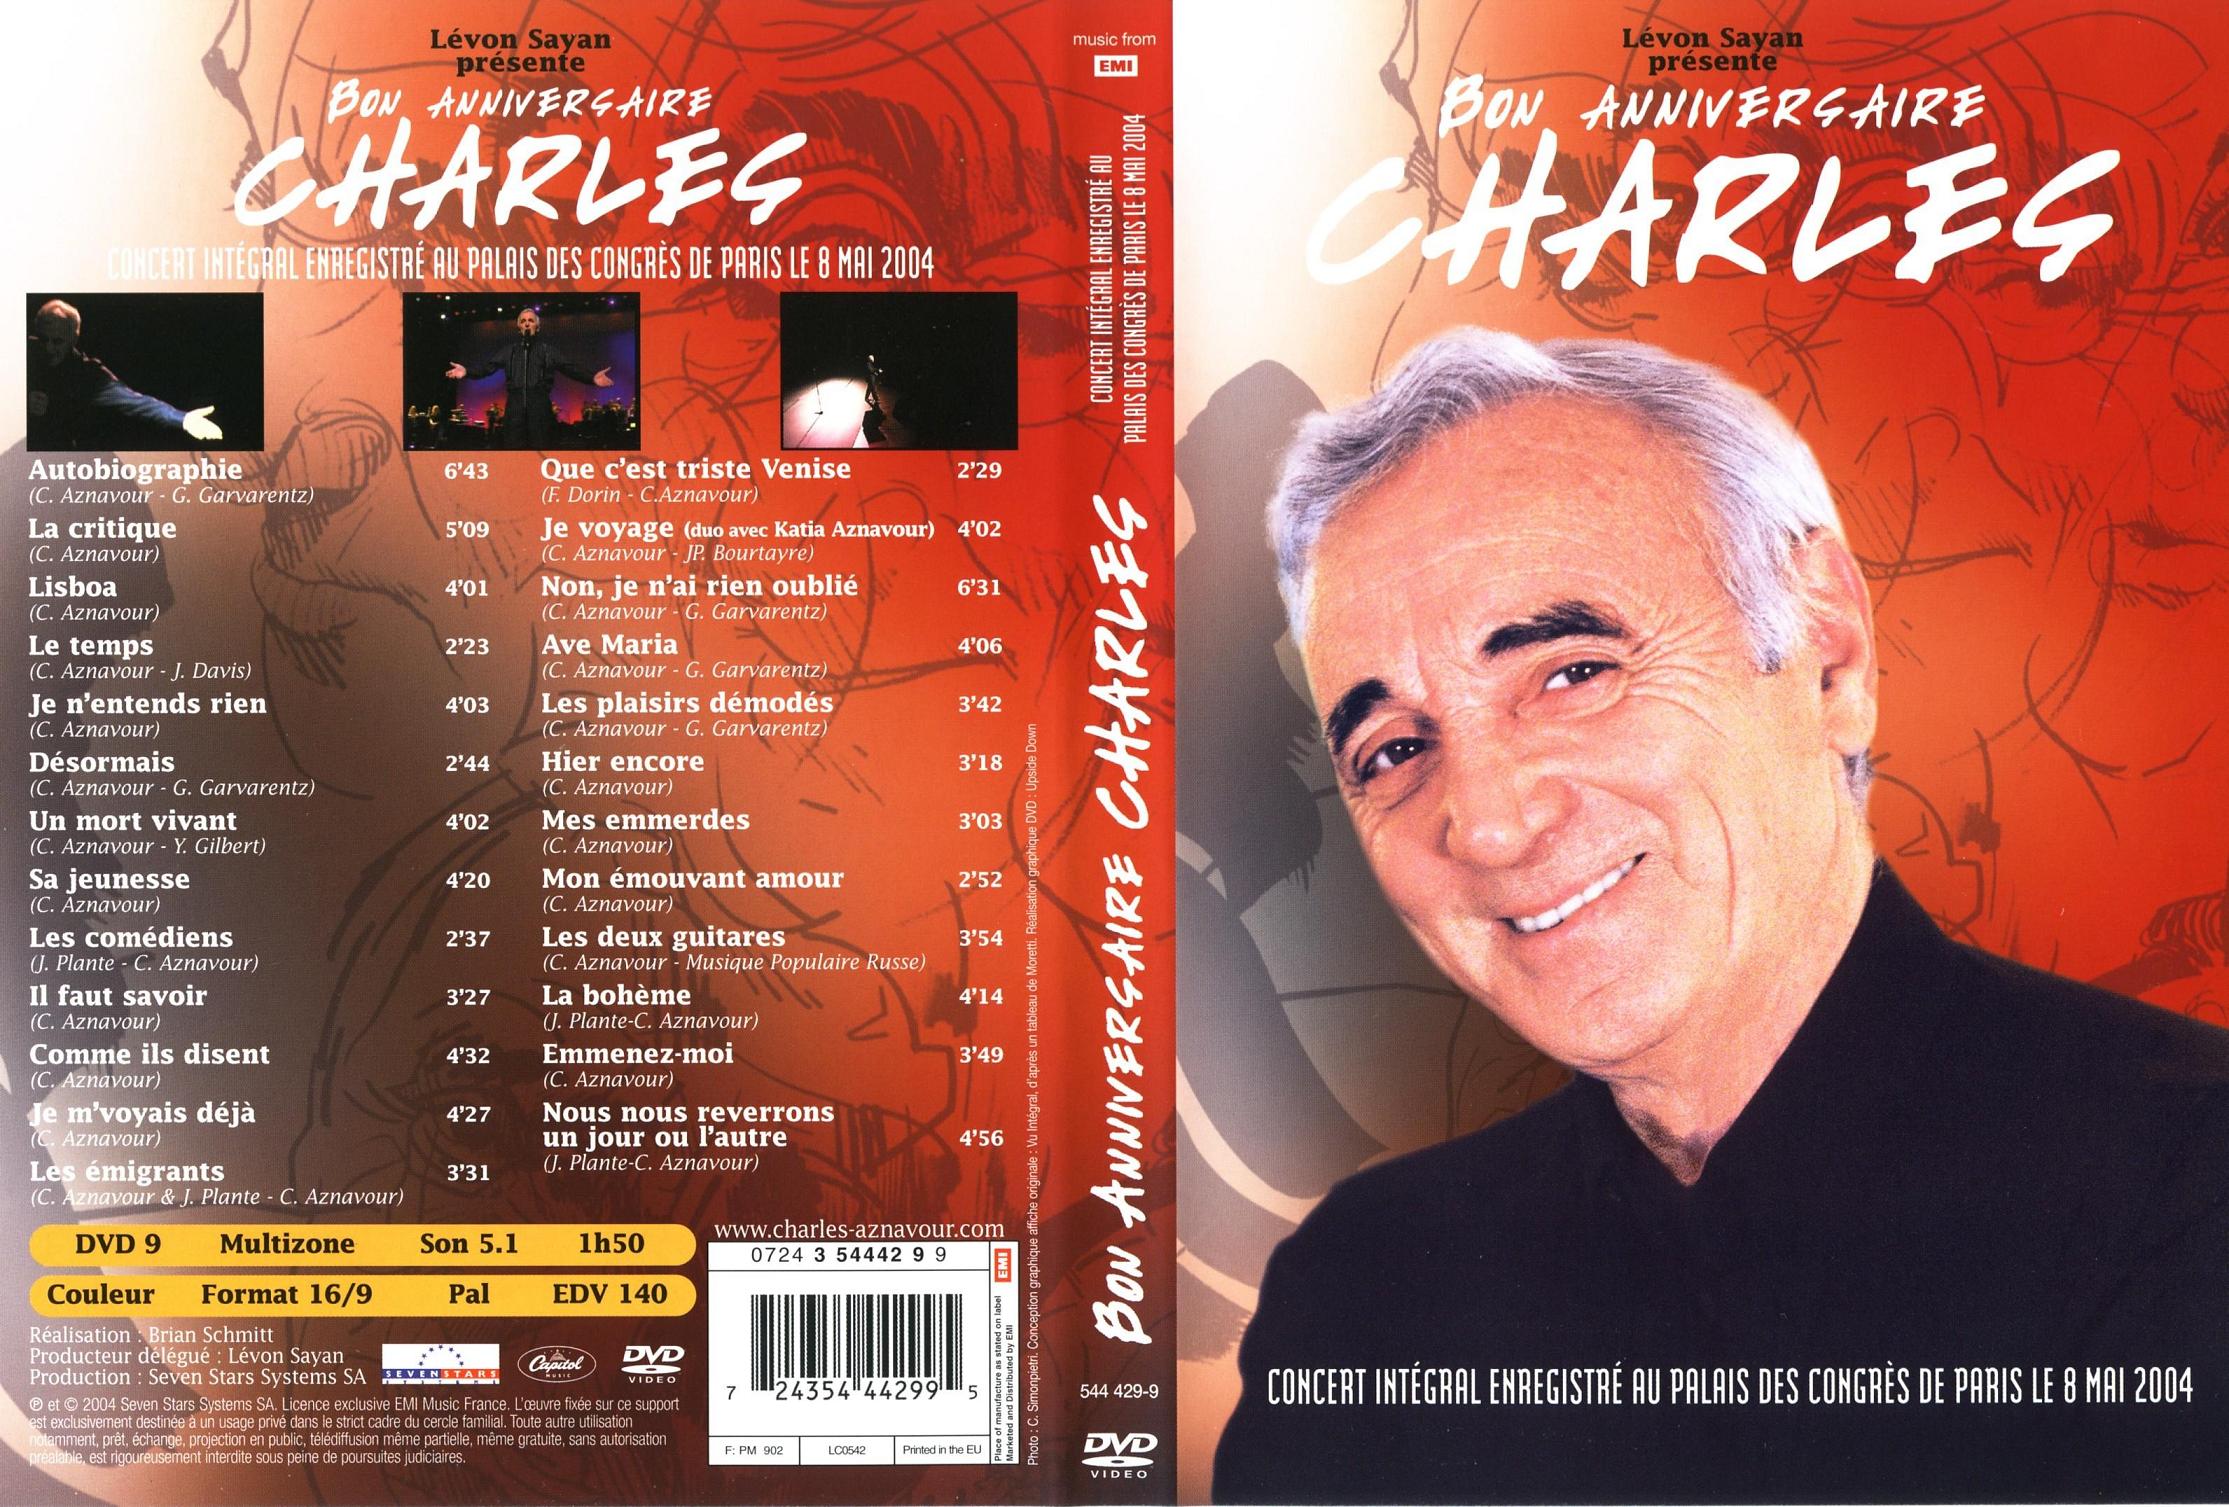 Jaquette DVD Charles Aznavour - Bon anniversaire Charles